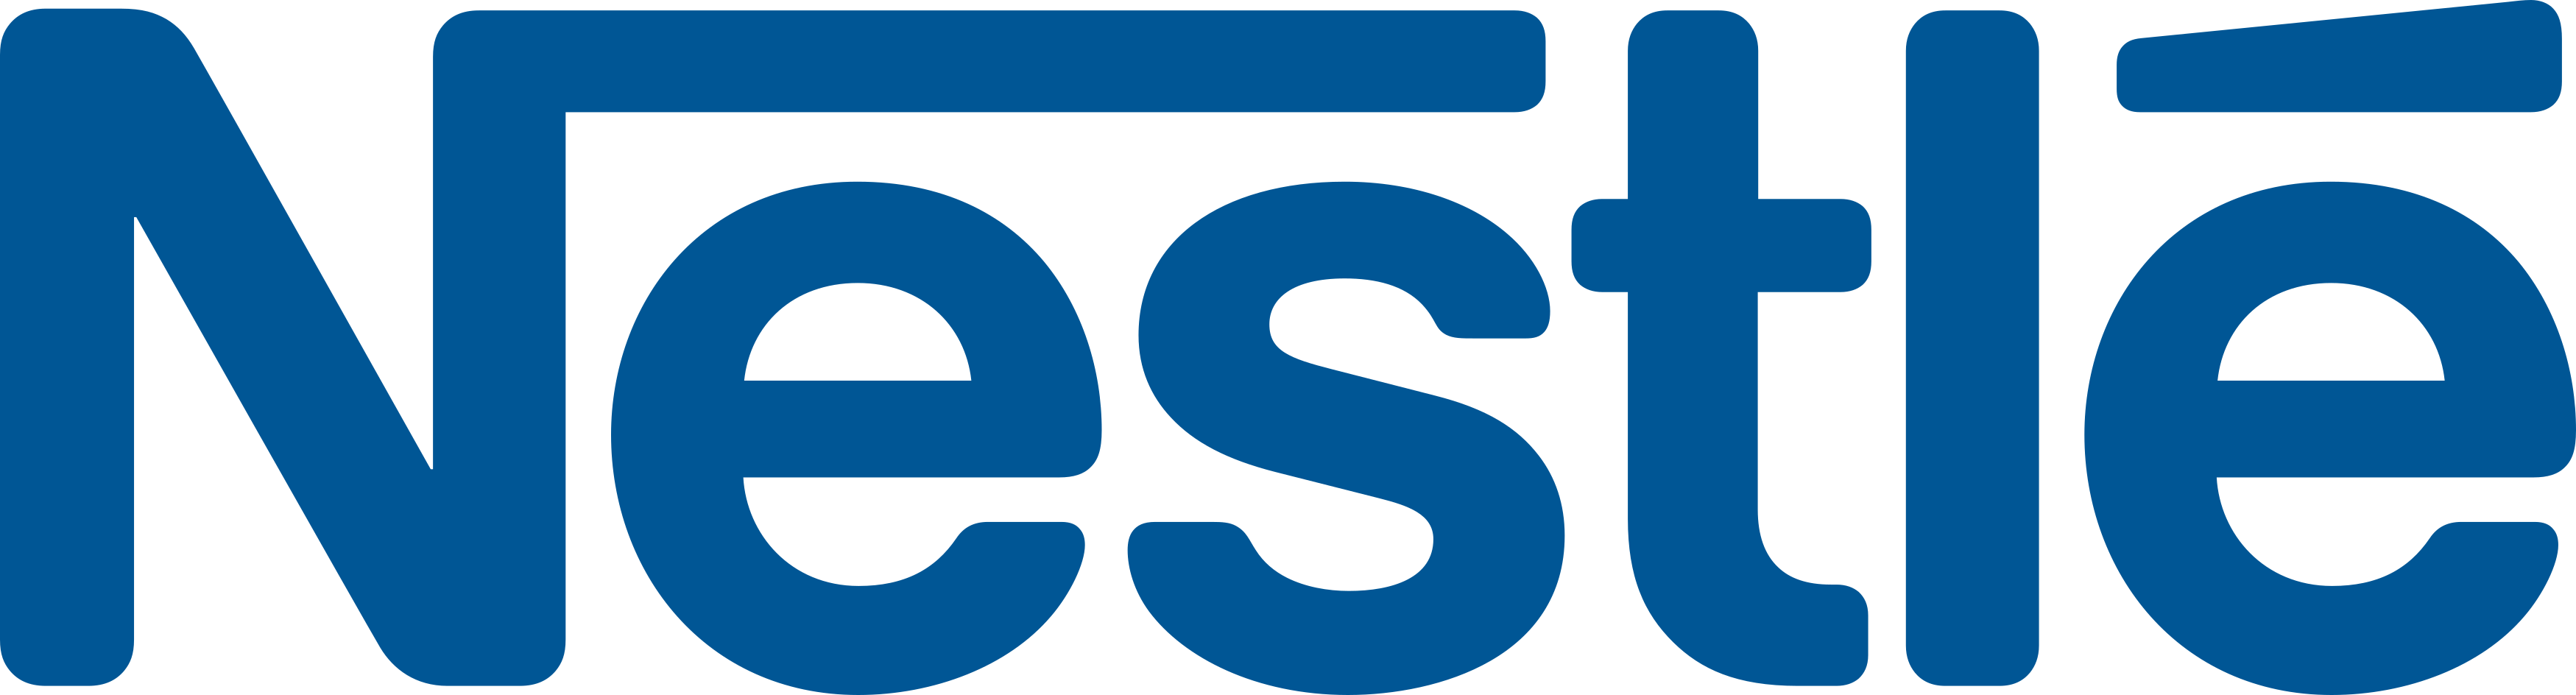 Nestle logo PNG изображения фон